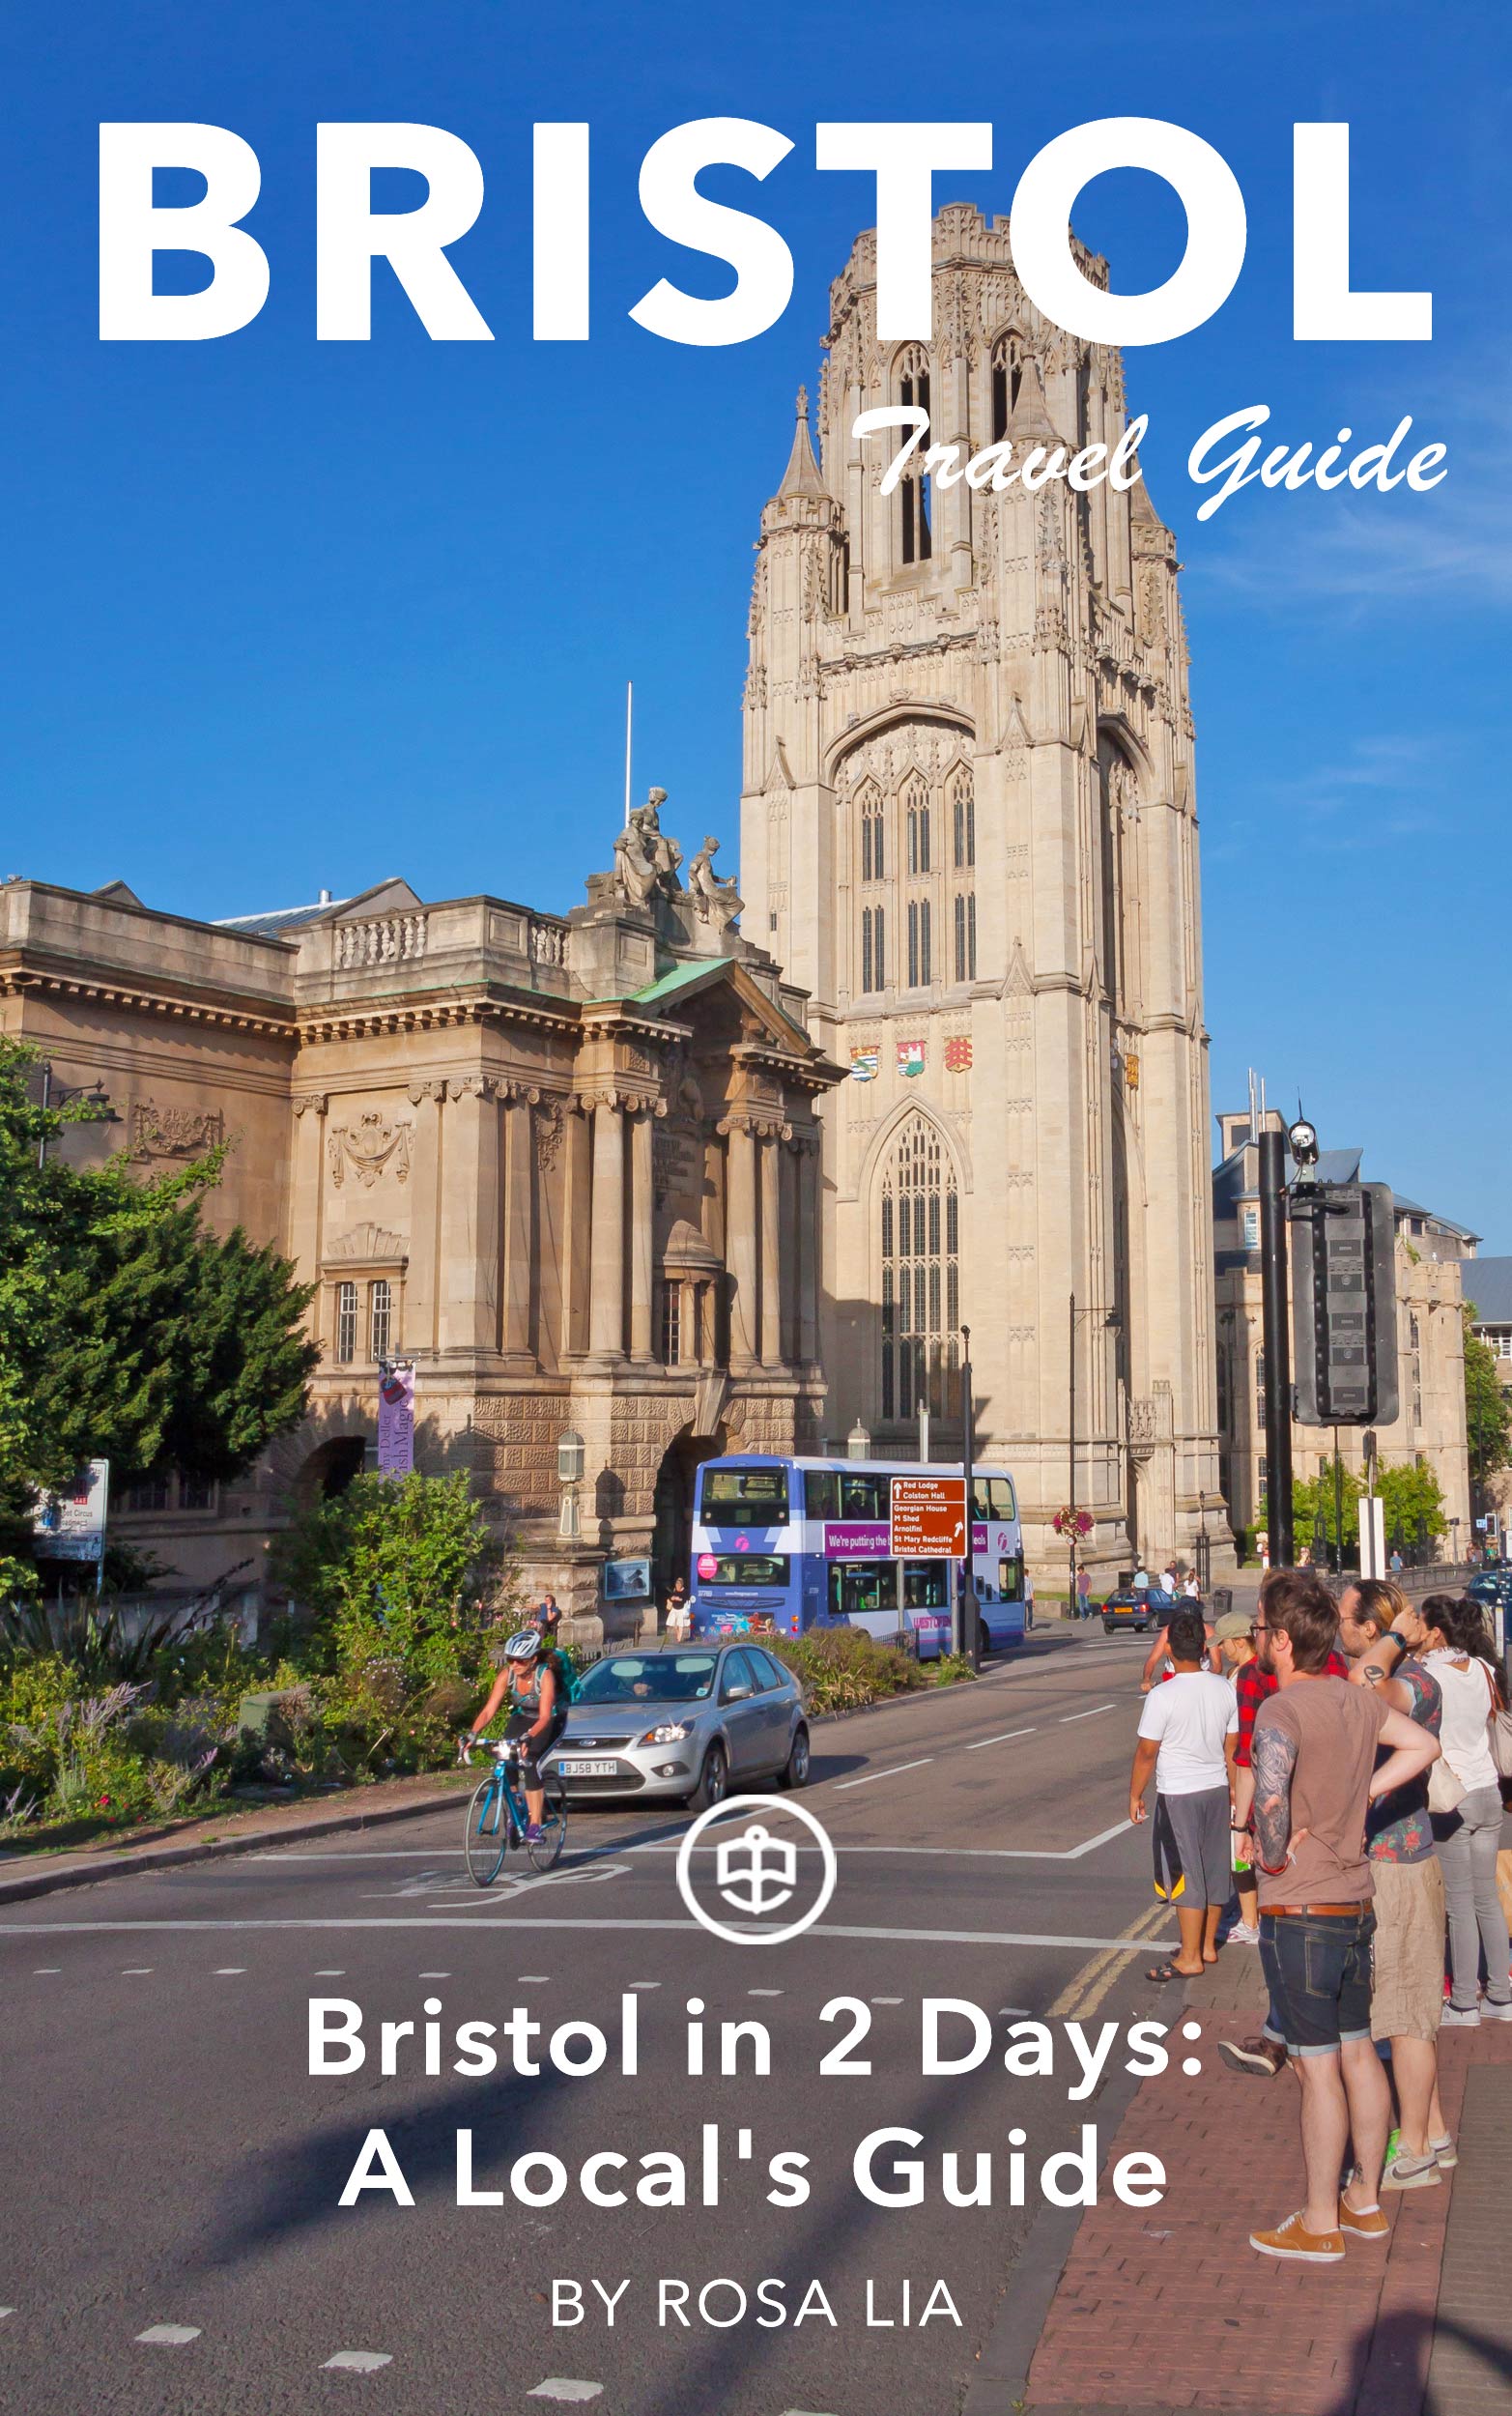 Bristol in 2 Days: A Local's Guide